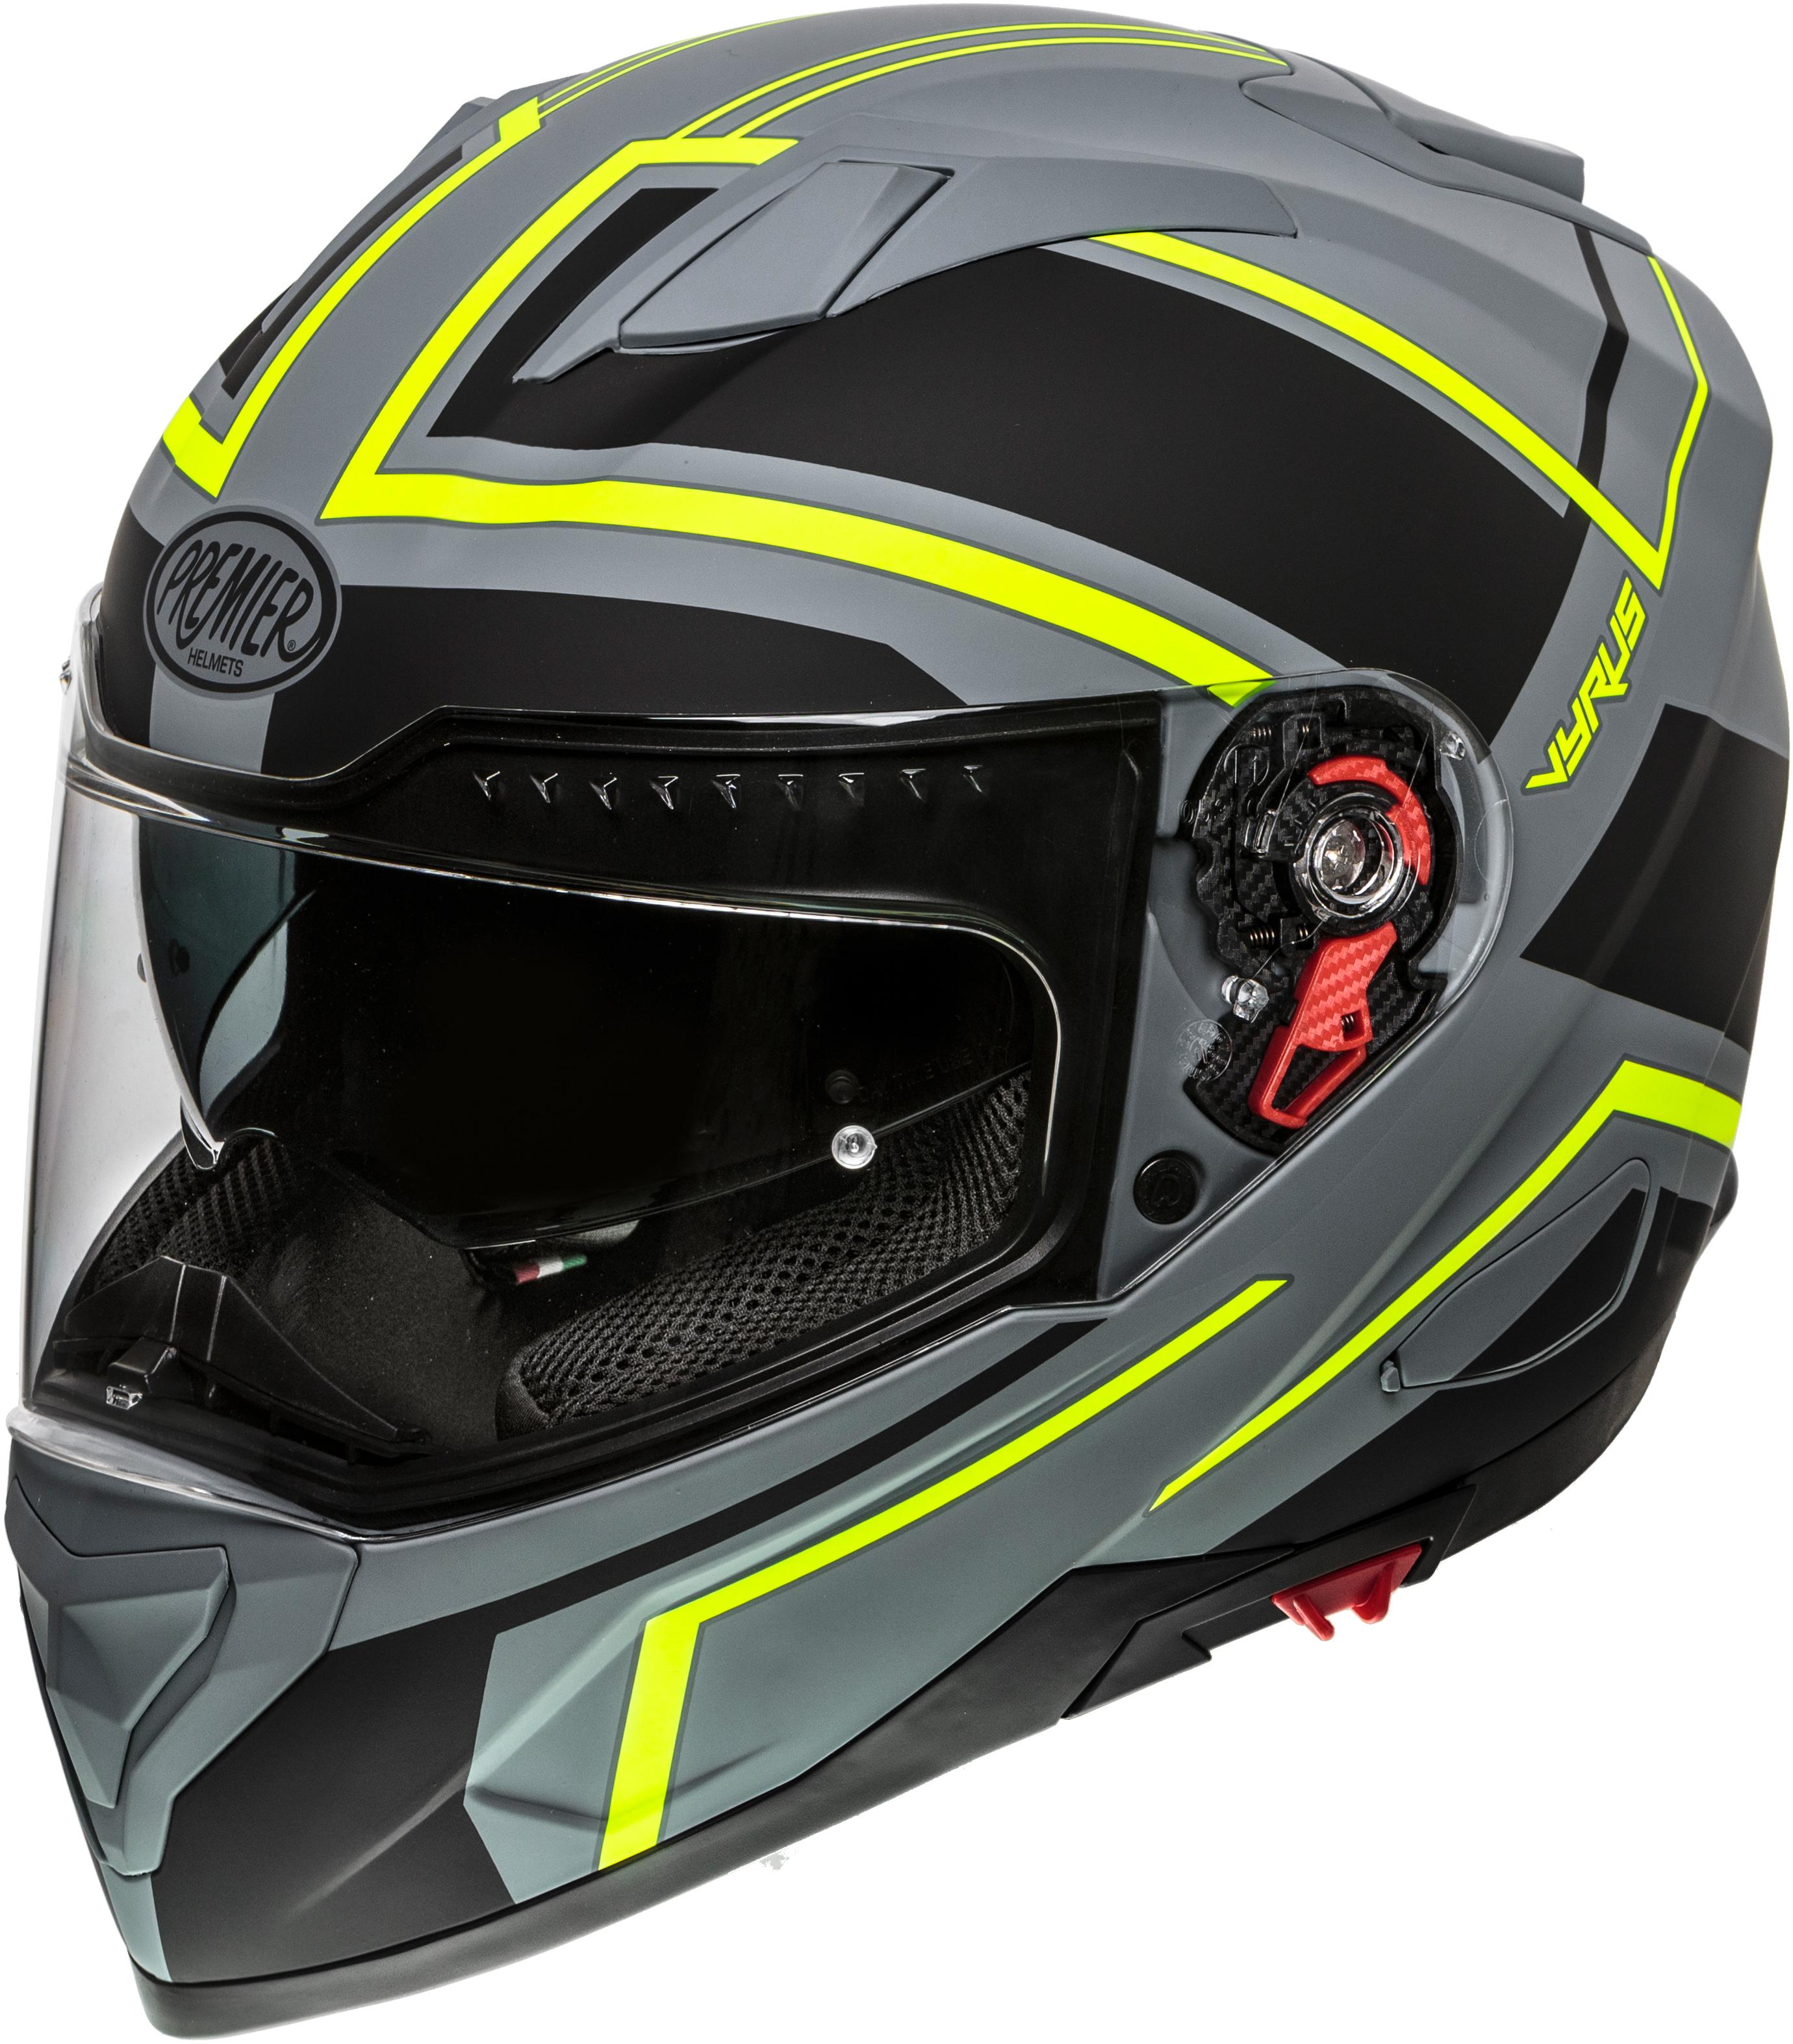 Premier Vyrus Helmet Grey/Neon Matt - Small